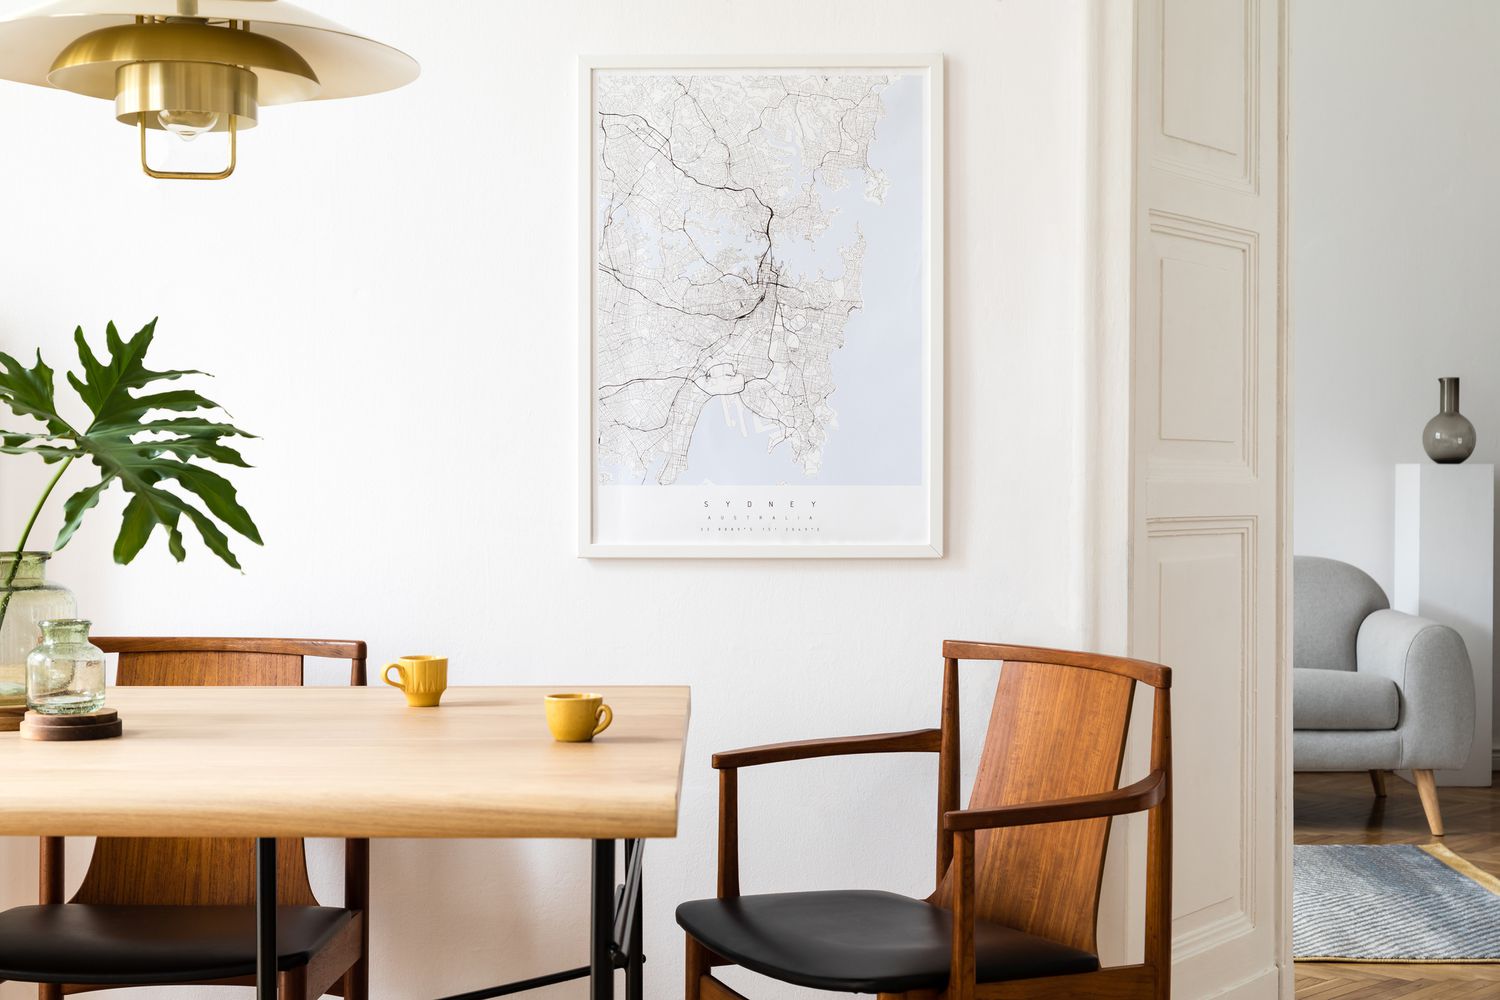 Muebles de cocina de inspiración escandinava